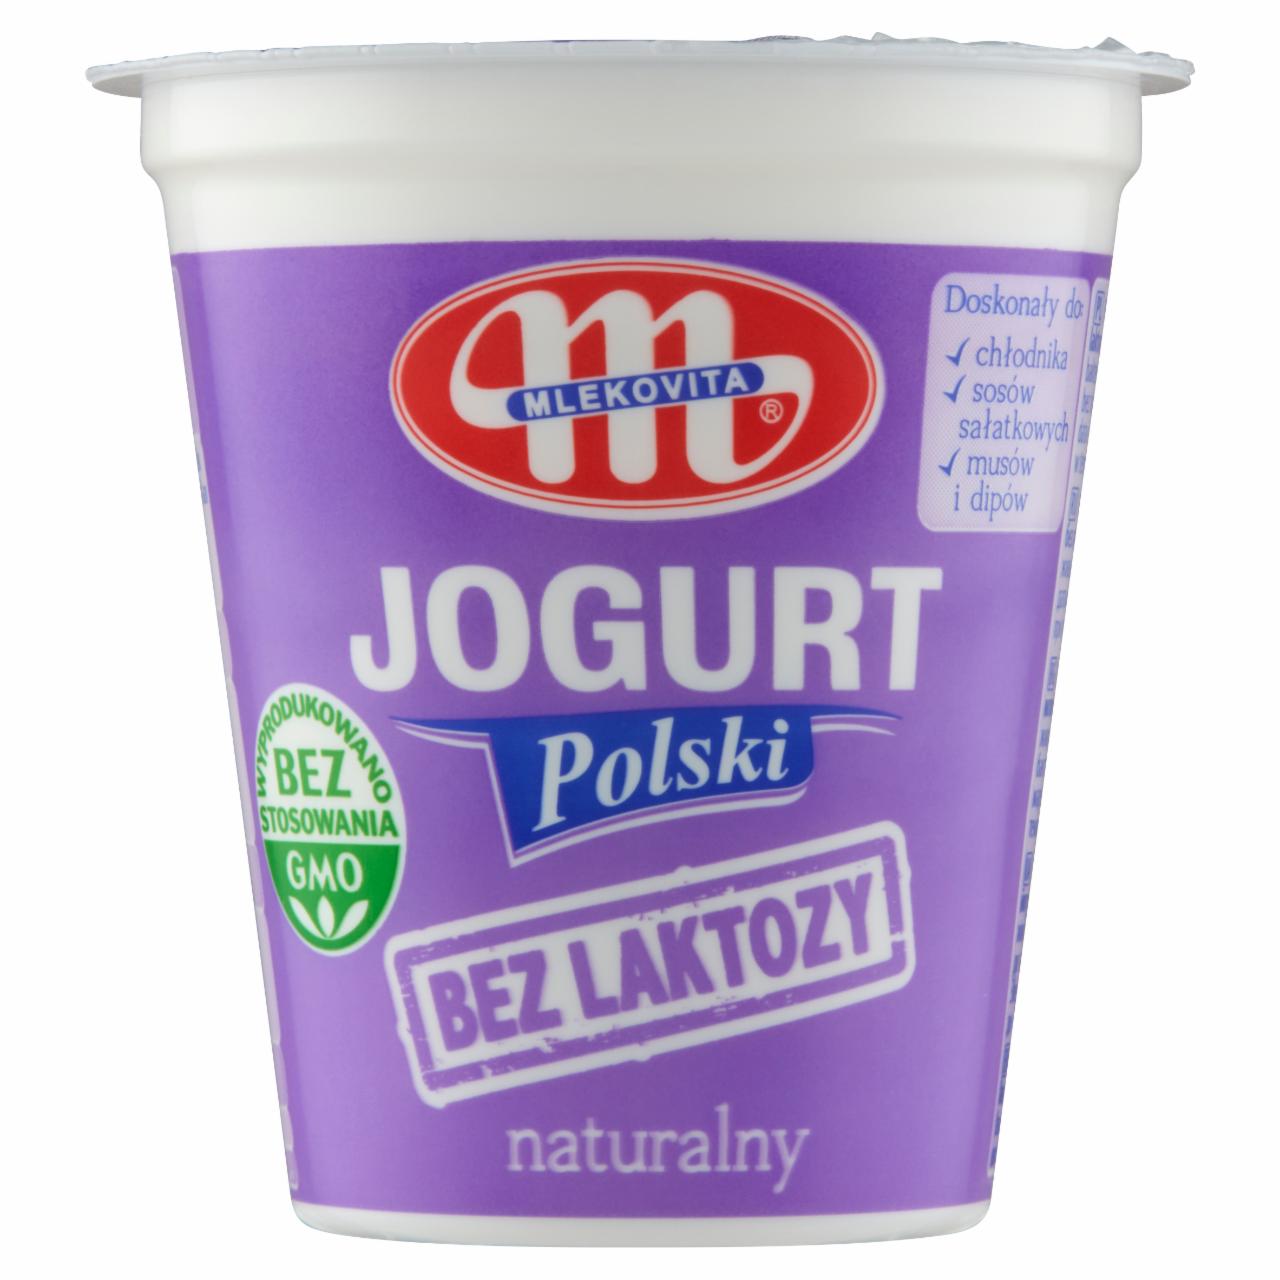 Zdjęcia - Mlekovita Jogurt Polski bez laktozy naturalny 150 g